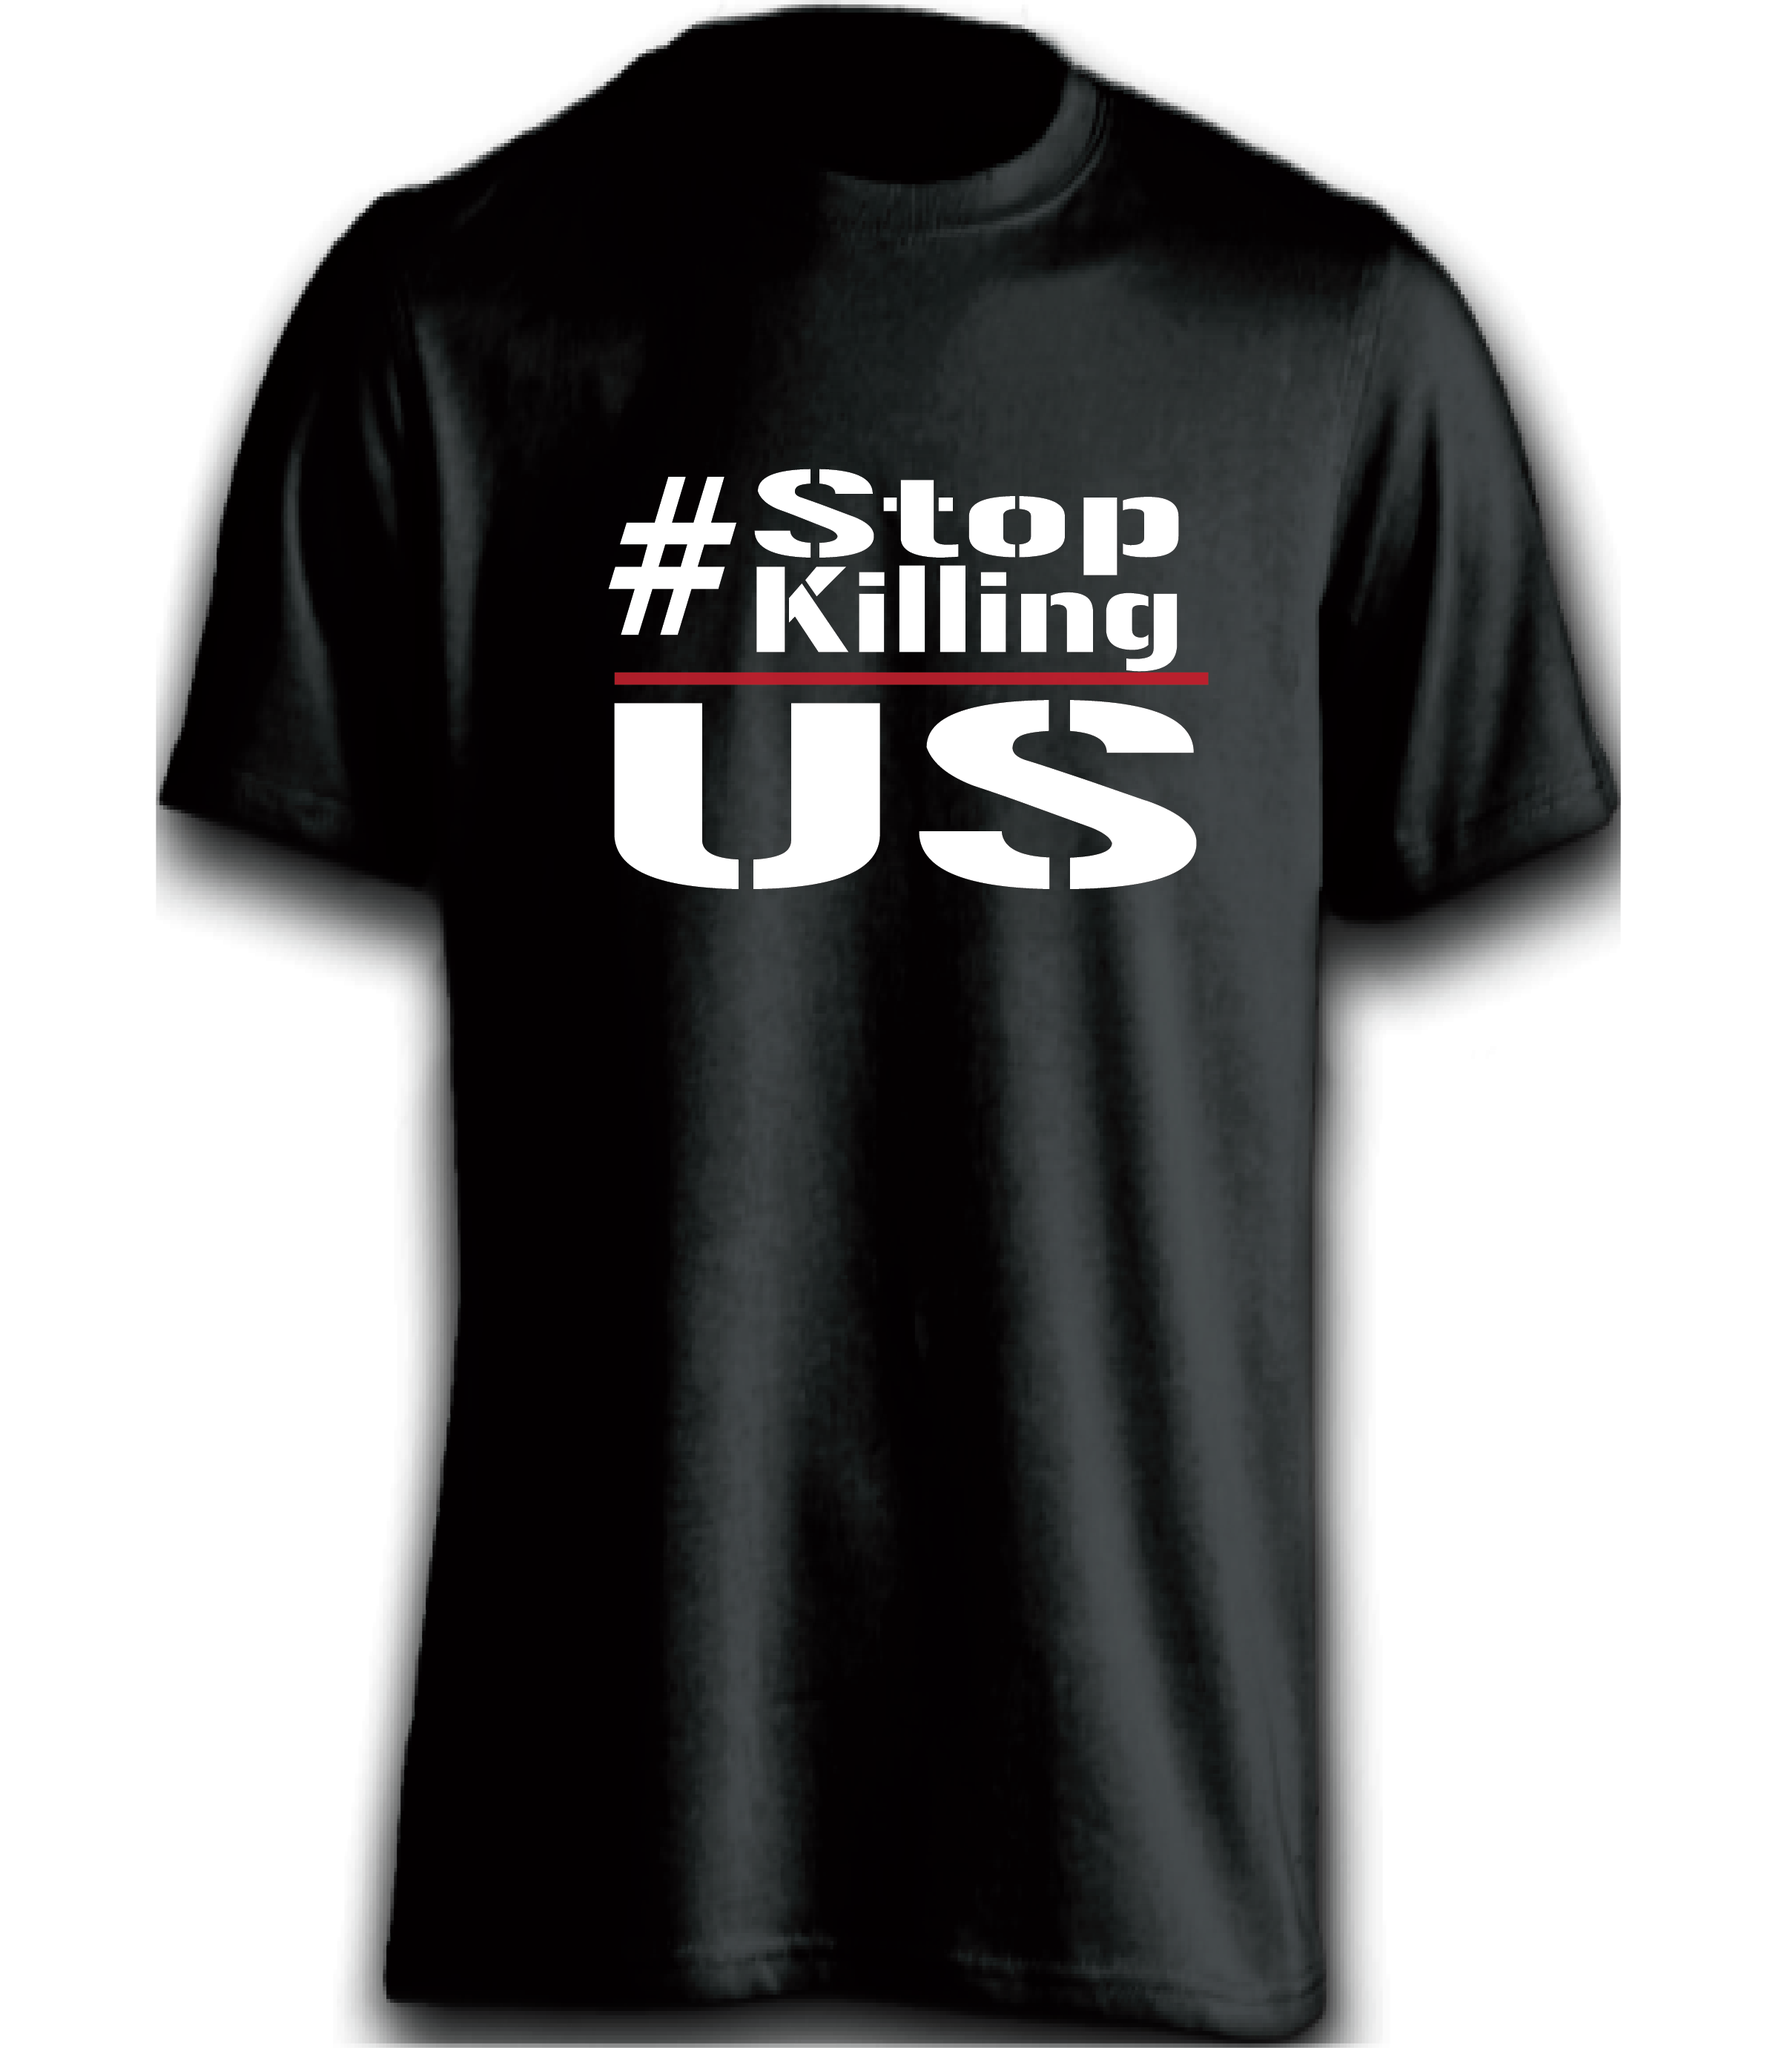 BLM - Stop Killing Us | Black Lives Matter | Justice - T Shirt - 550strong